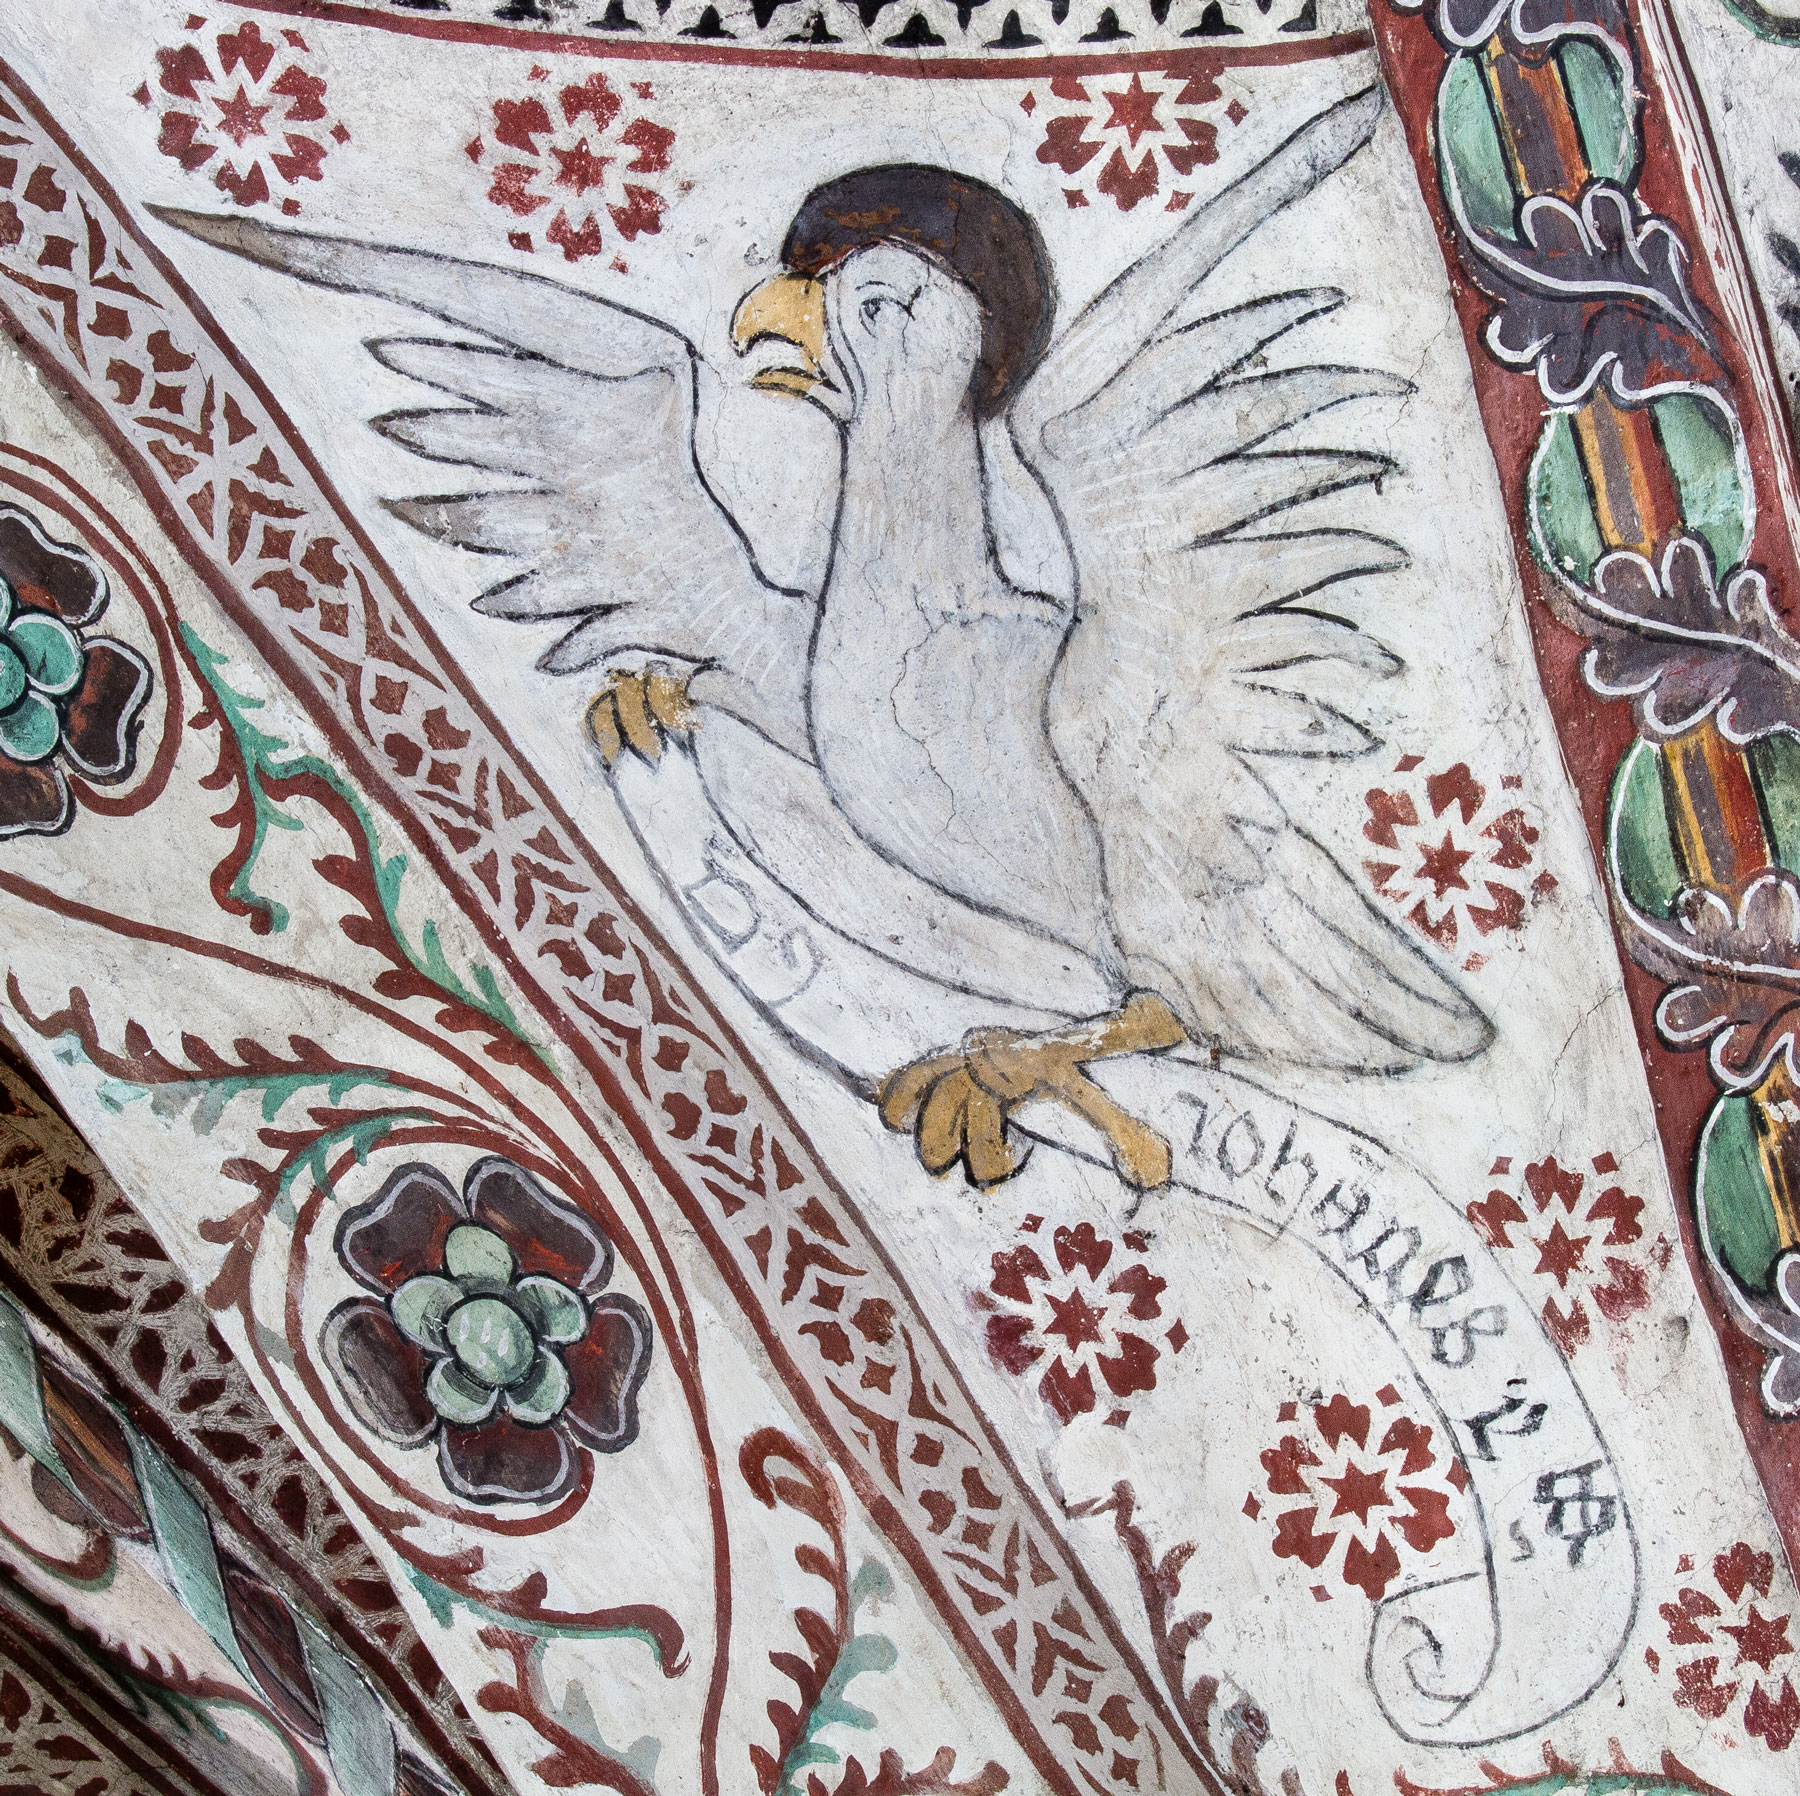 Evangelisten Johannes symbol, en örn (S) - Odensala kyrka